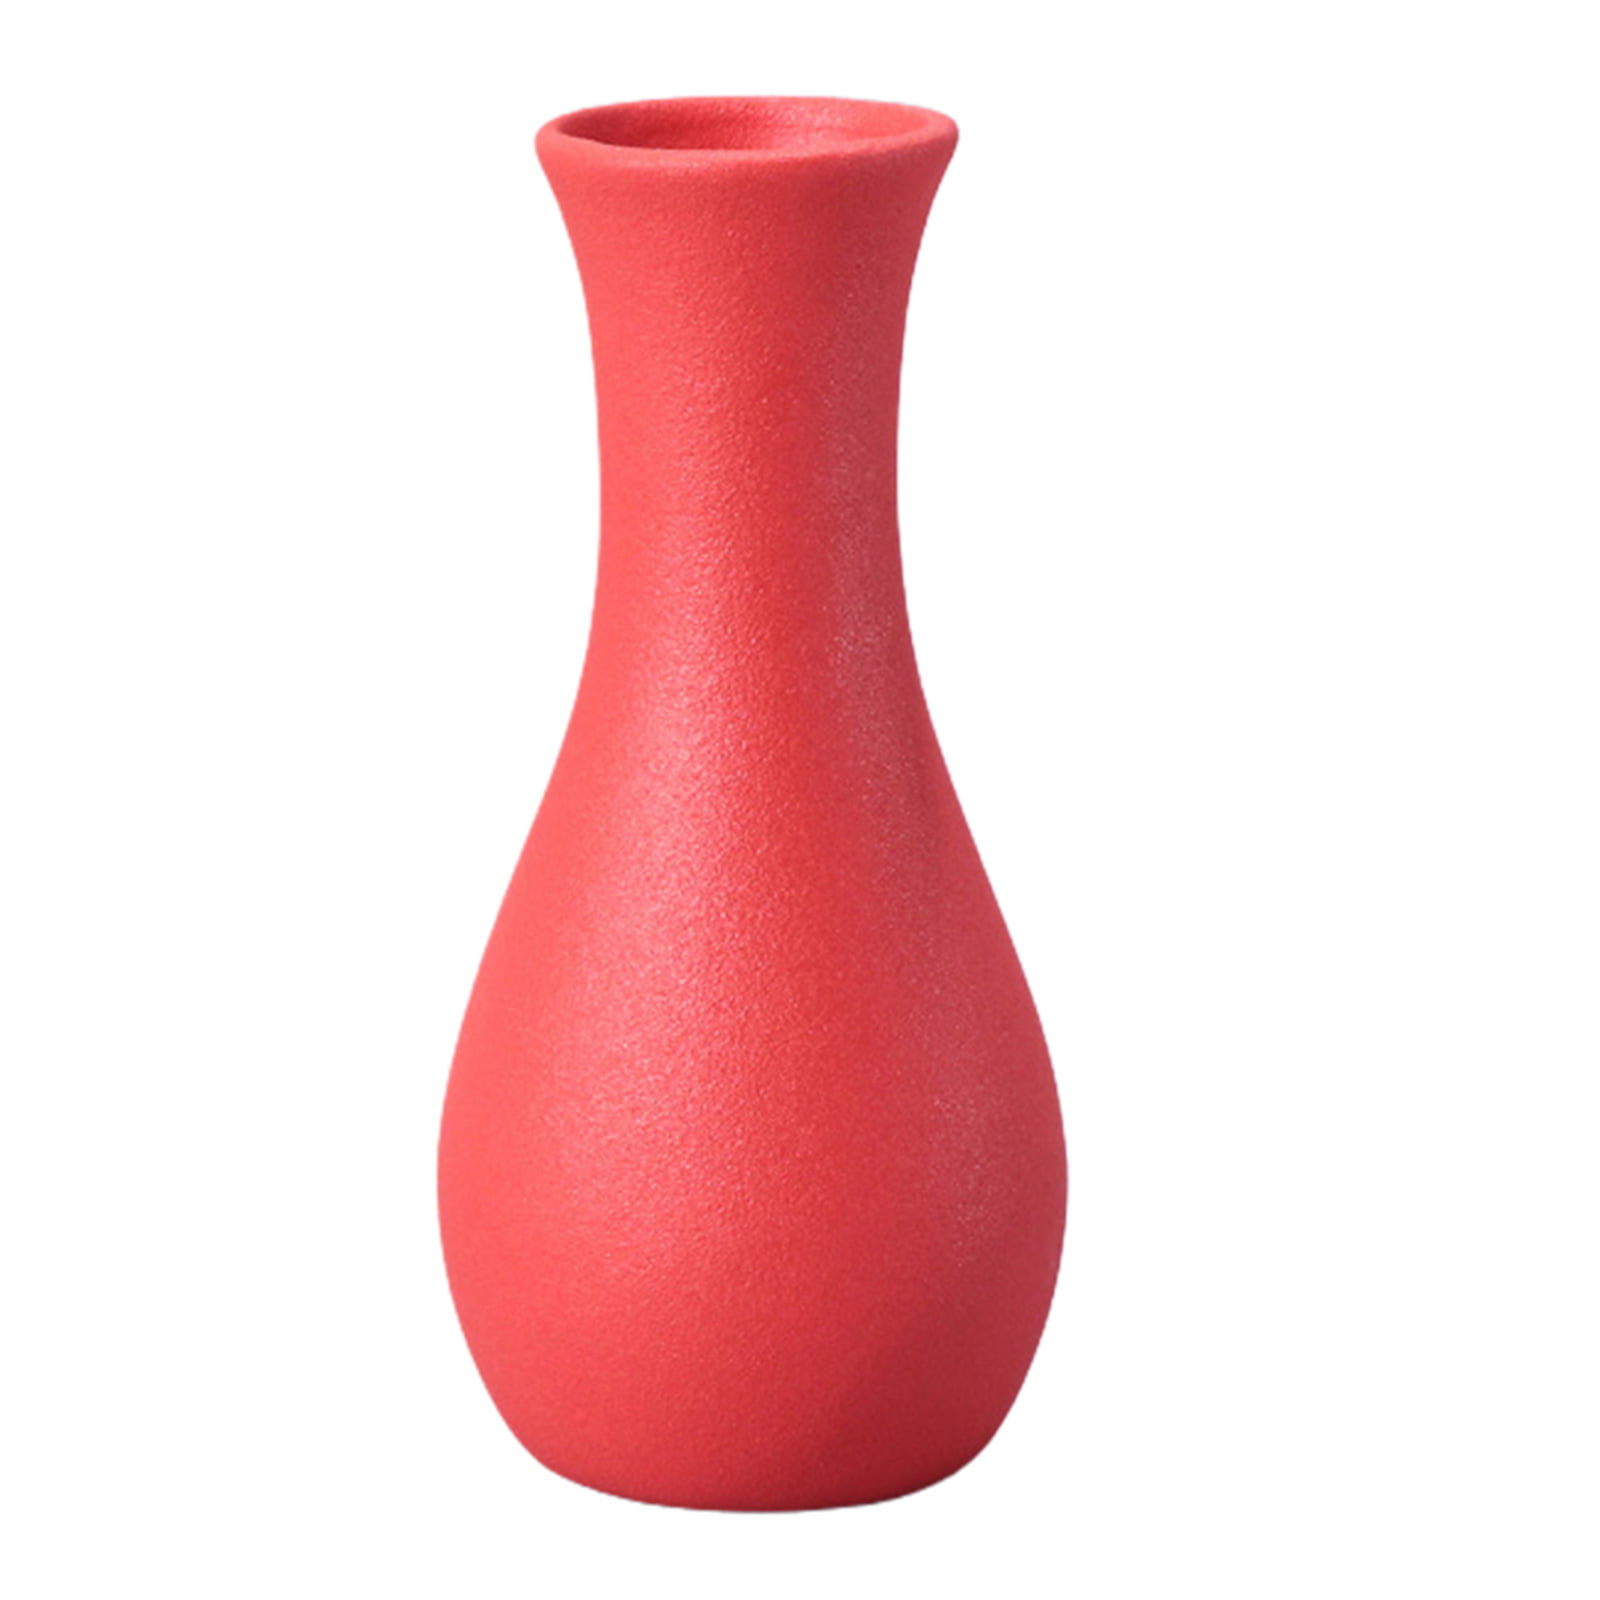 6 Inch High Frosted Elegant Ceramic Vase Ceramic Vase Dry Flower Vases Minimalism Style for Modern Table Shelf Home Decor Gift